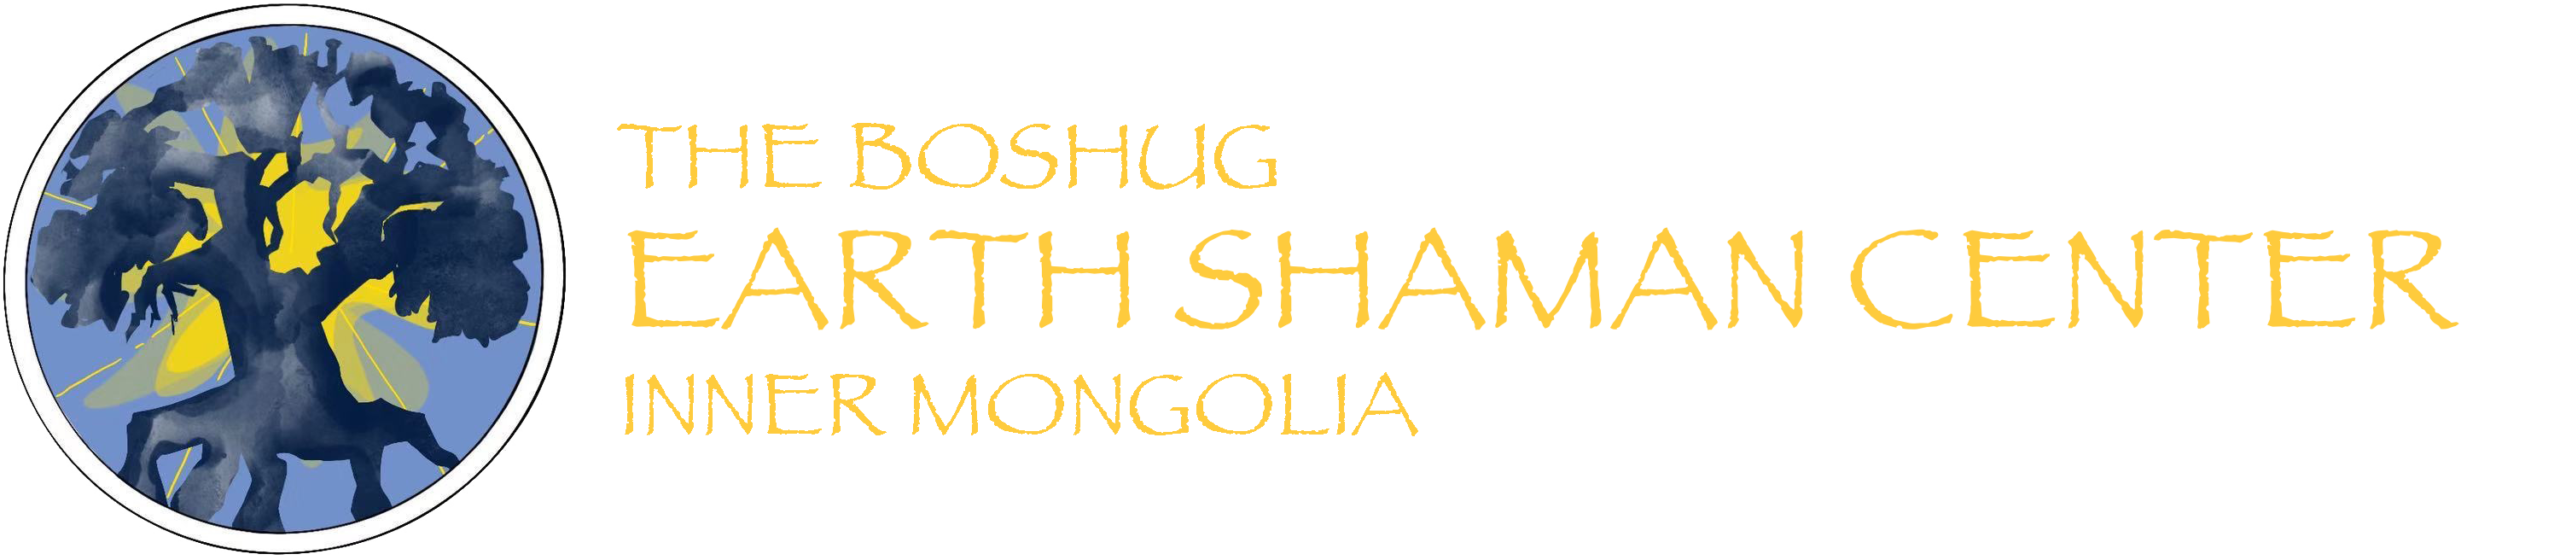 The Boshug Earth Shaman Center